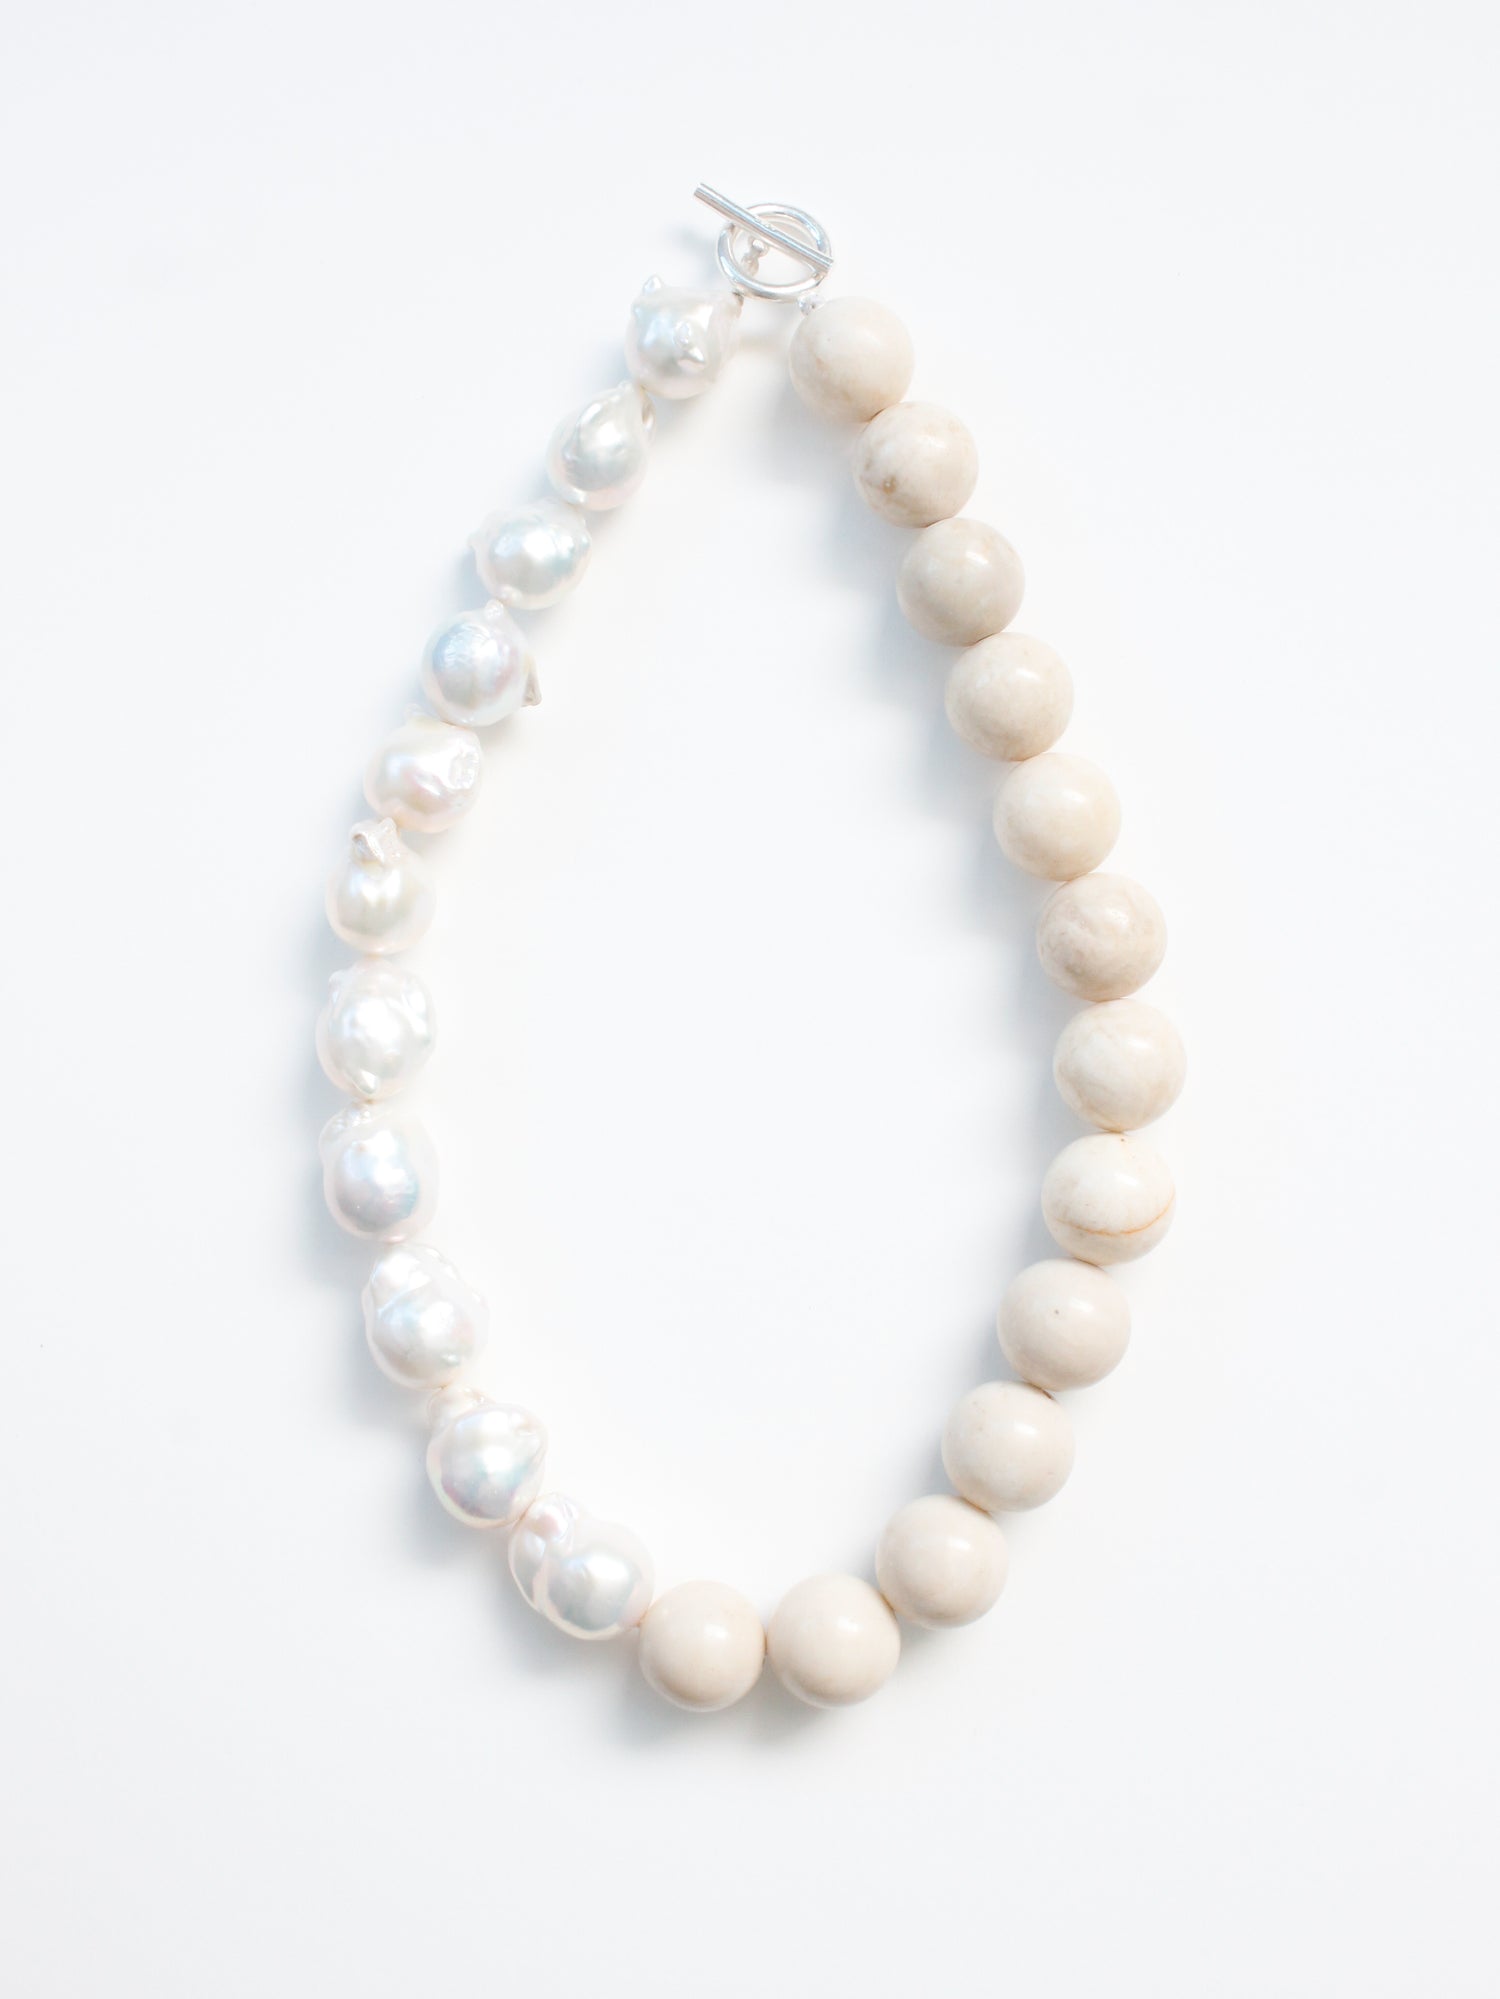 Stone Necklace - Baroque Pearls meet White Jasper